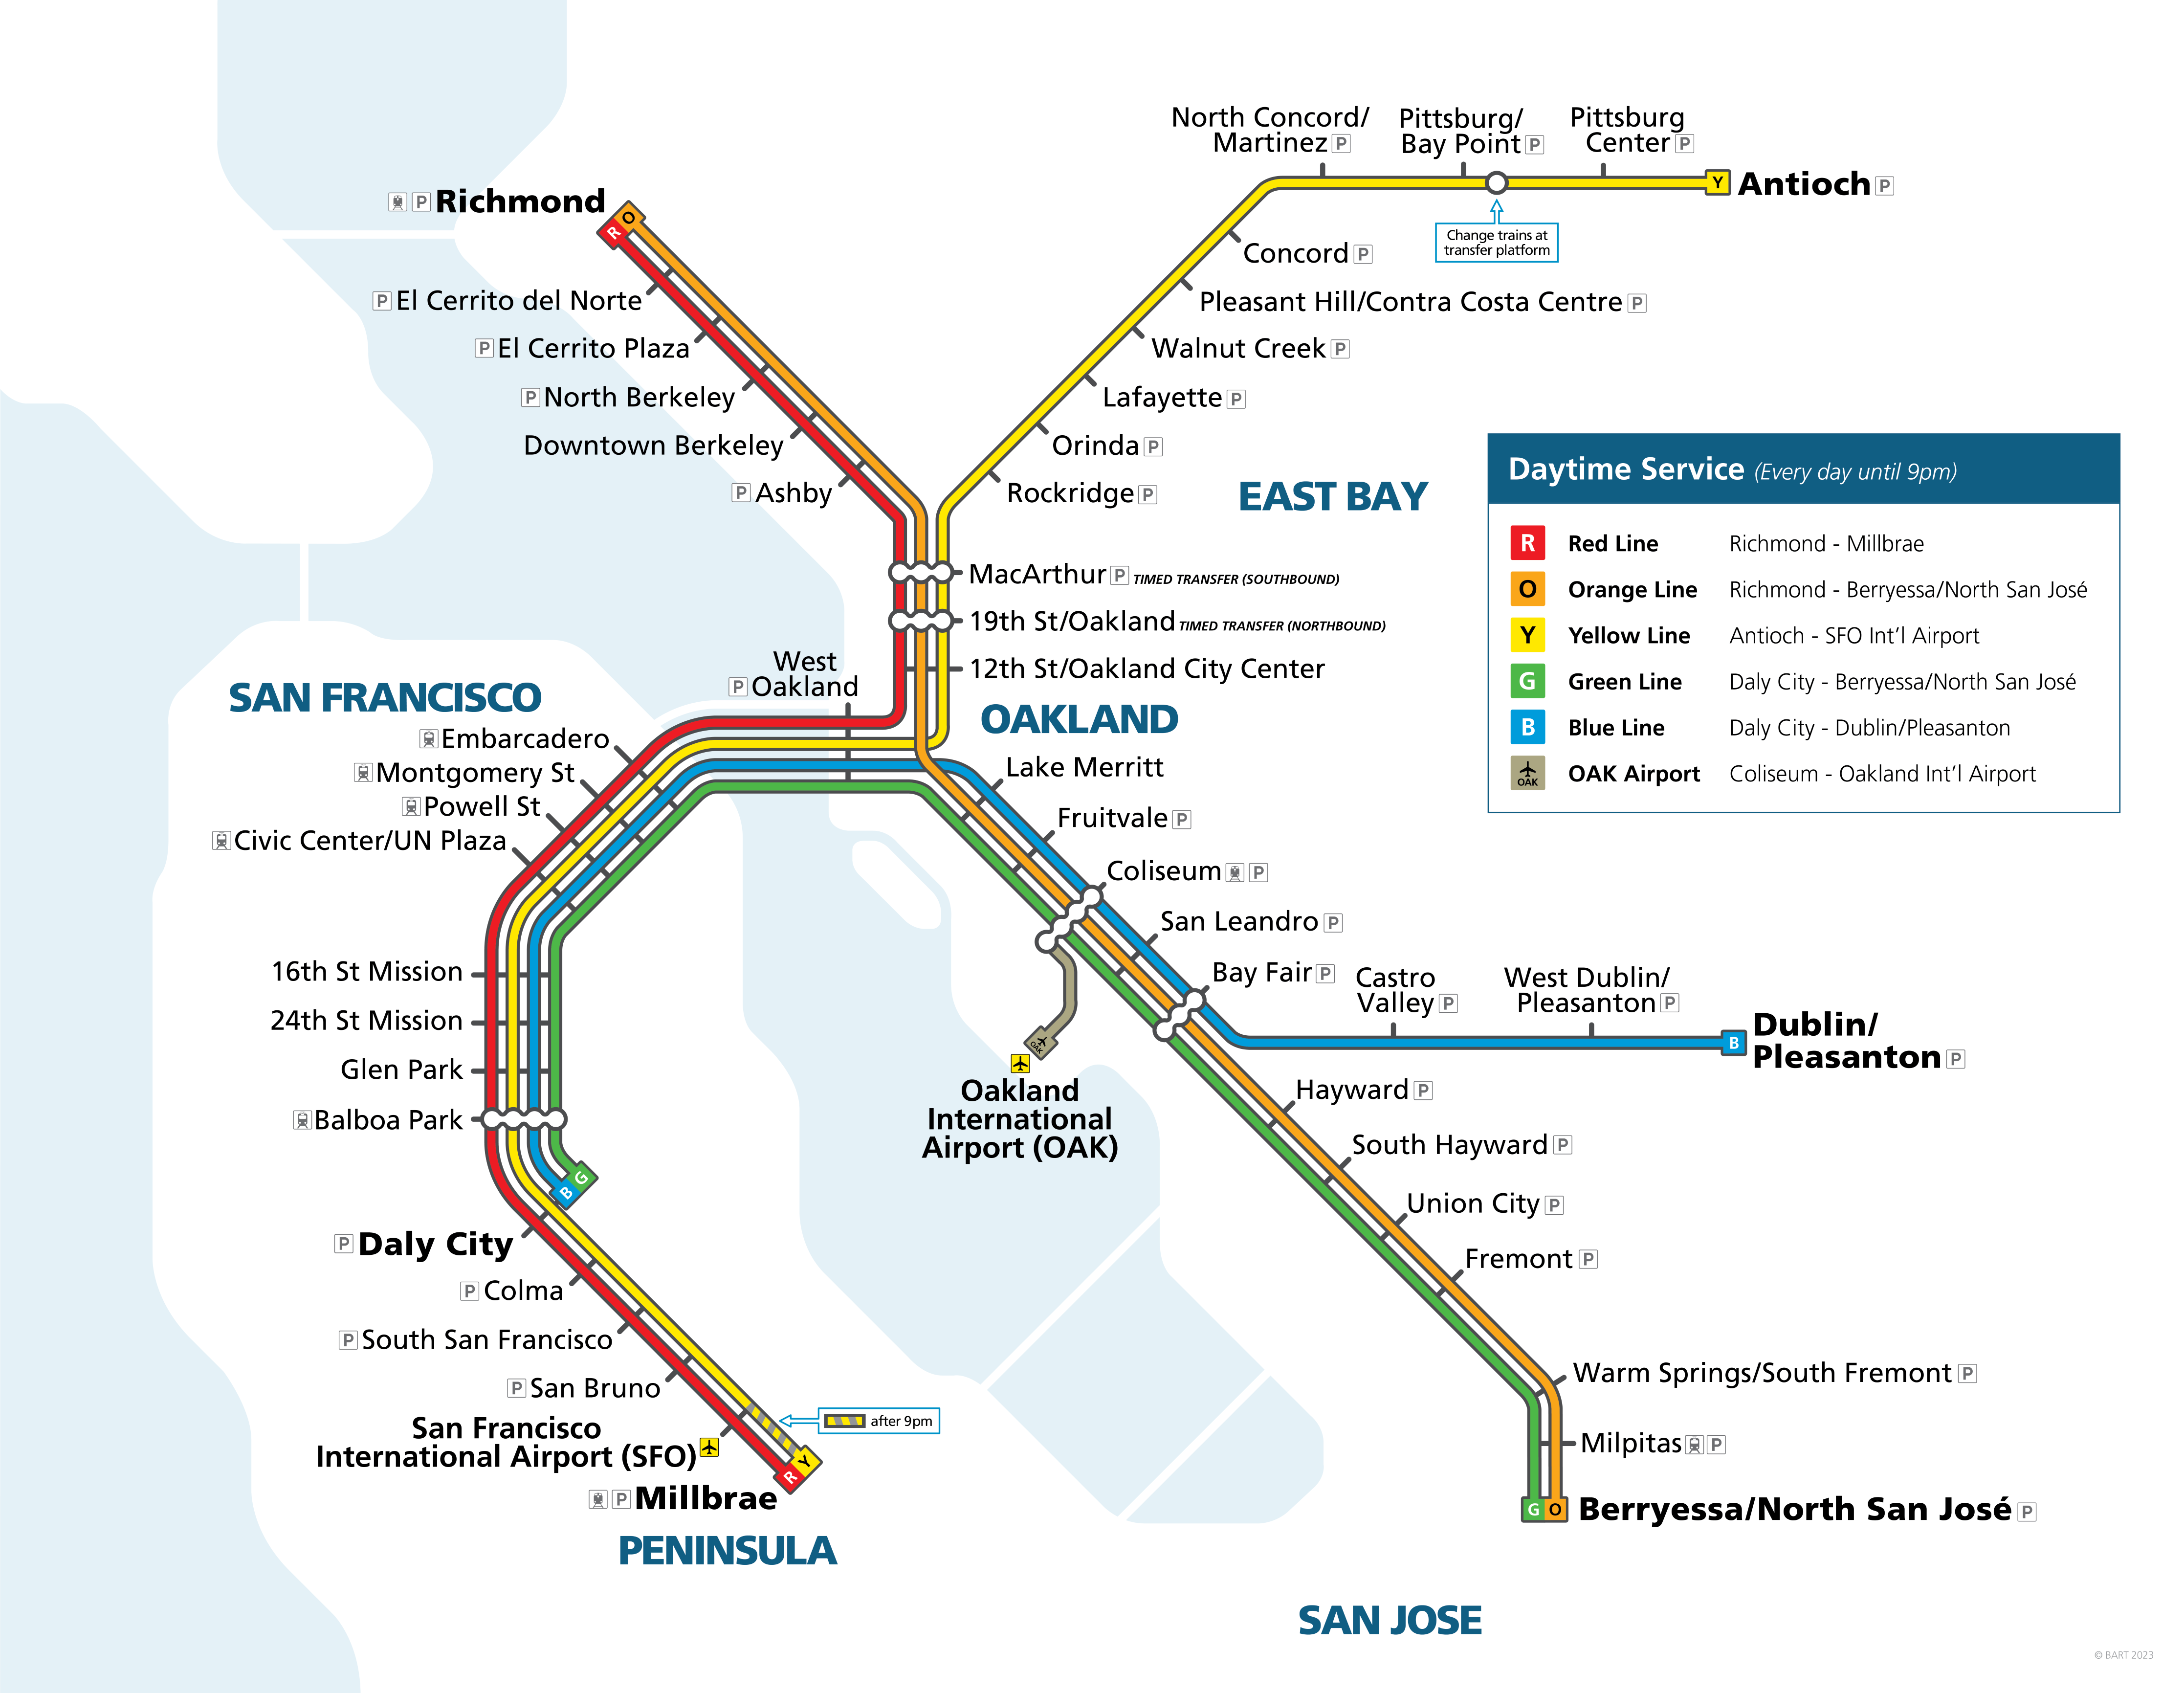 GO Transit - System Map